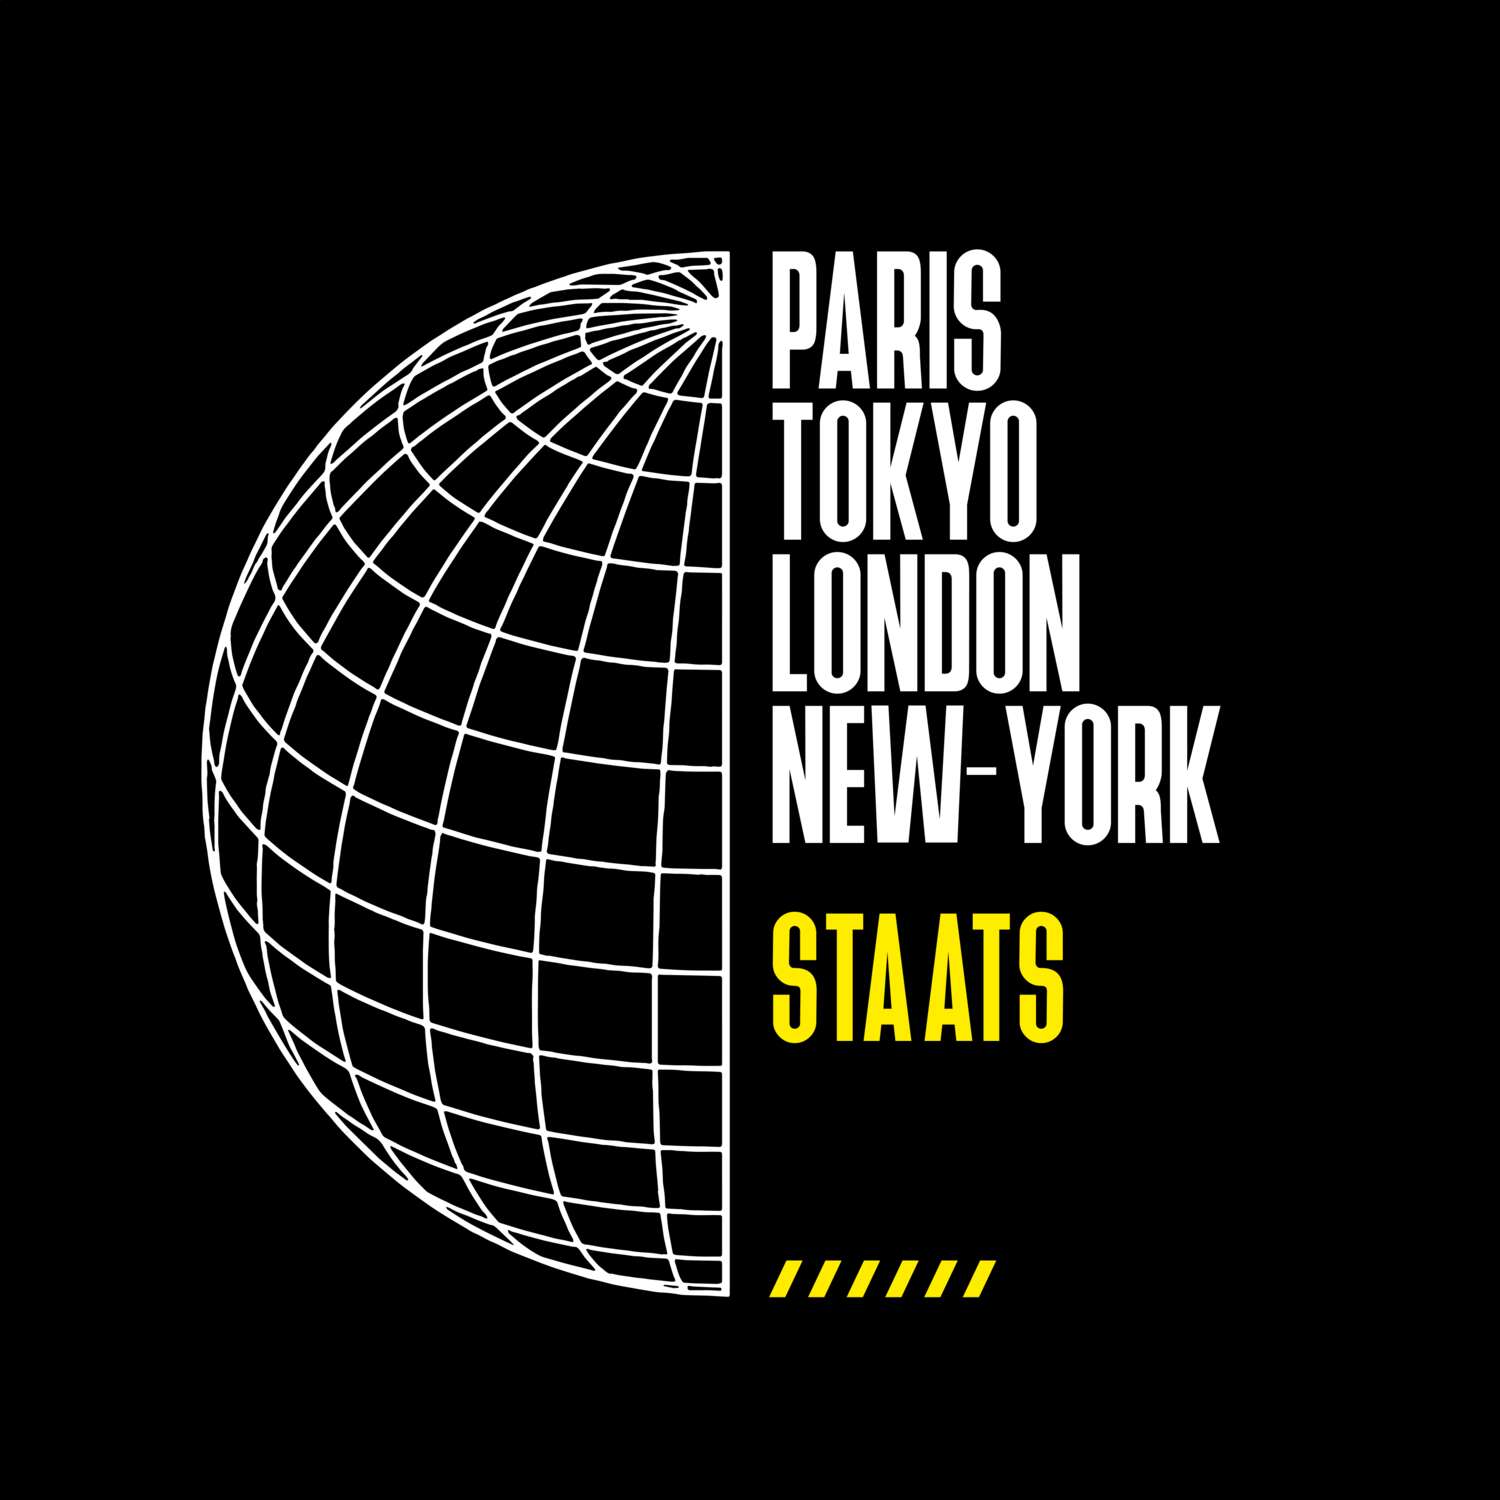 Staats T-Shirt »Paris Tokyo London«